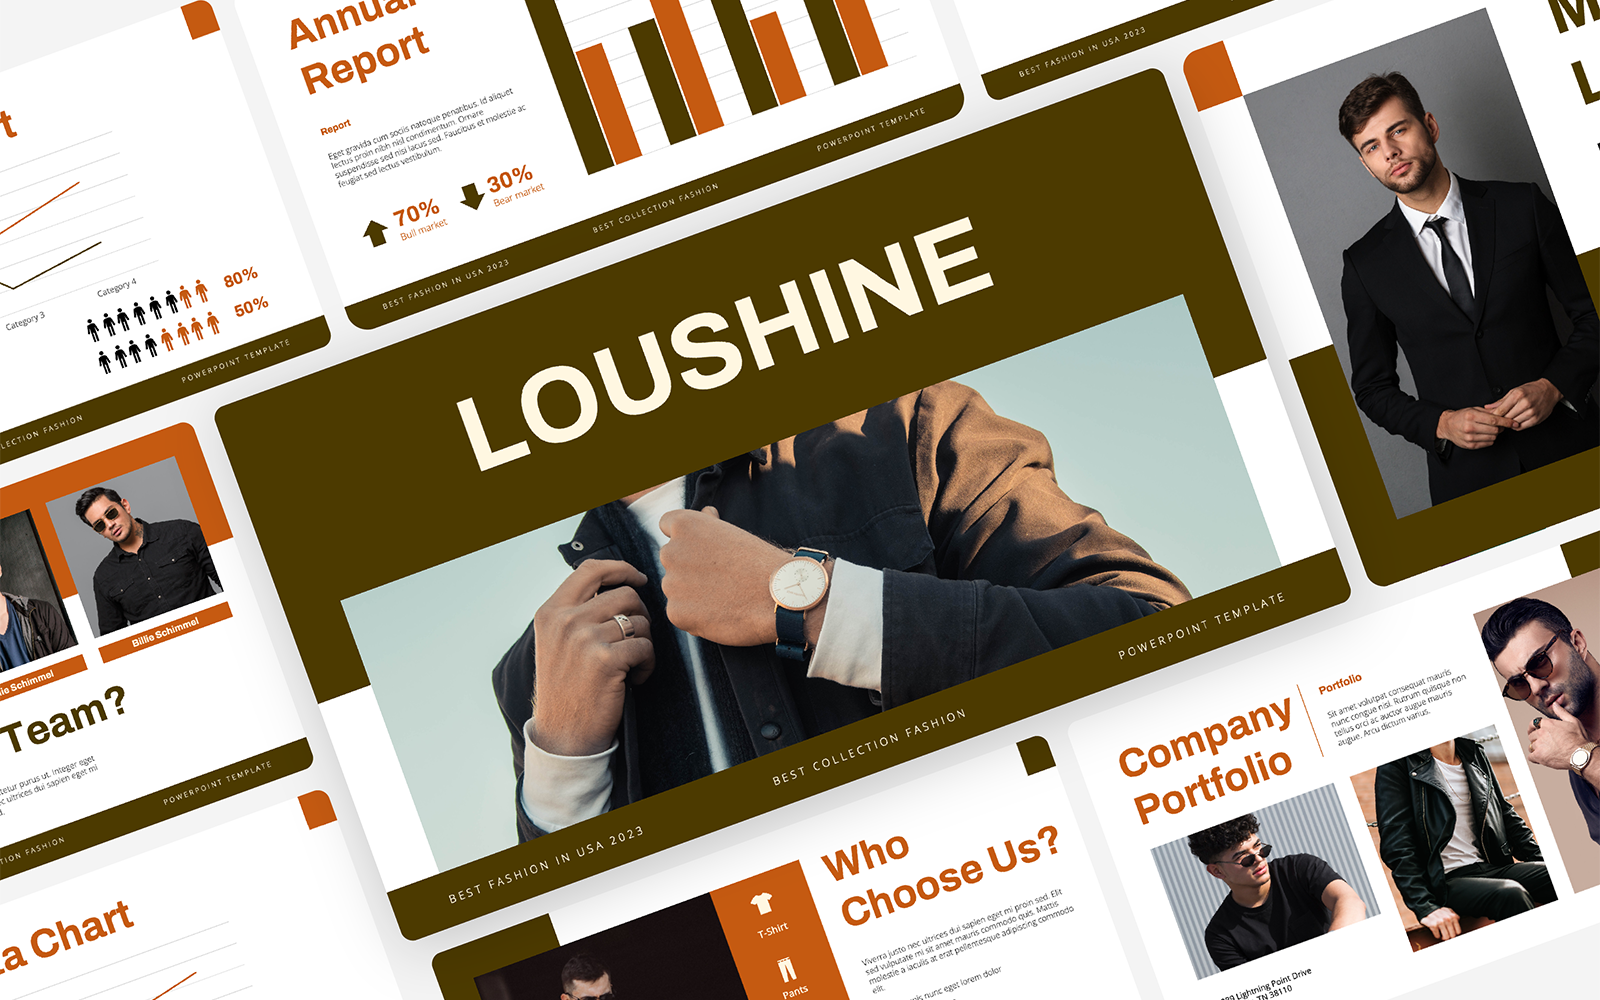 Loushine – Aesthetic Fashion Brand Template